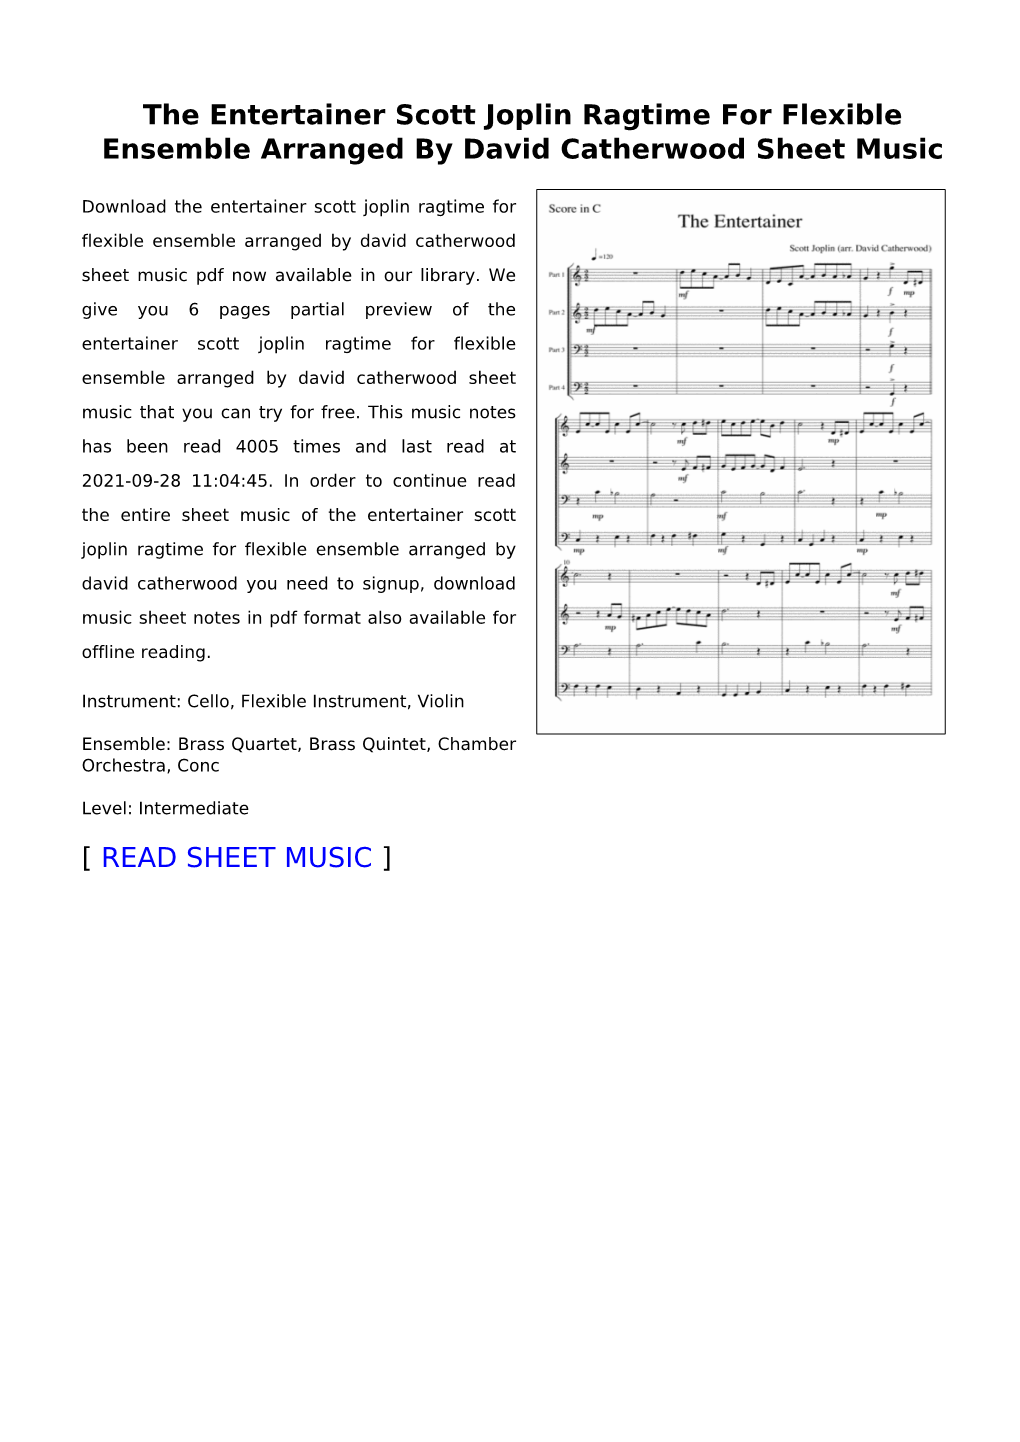 The Entertainer Scott Joplin Ragtime for Flexible Ensemble Arranged by David Catherwood Sheet Music